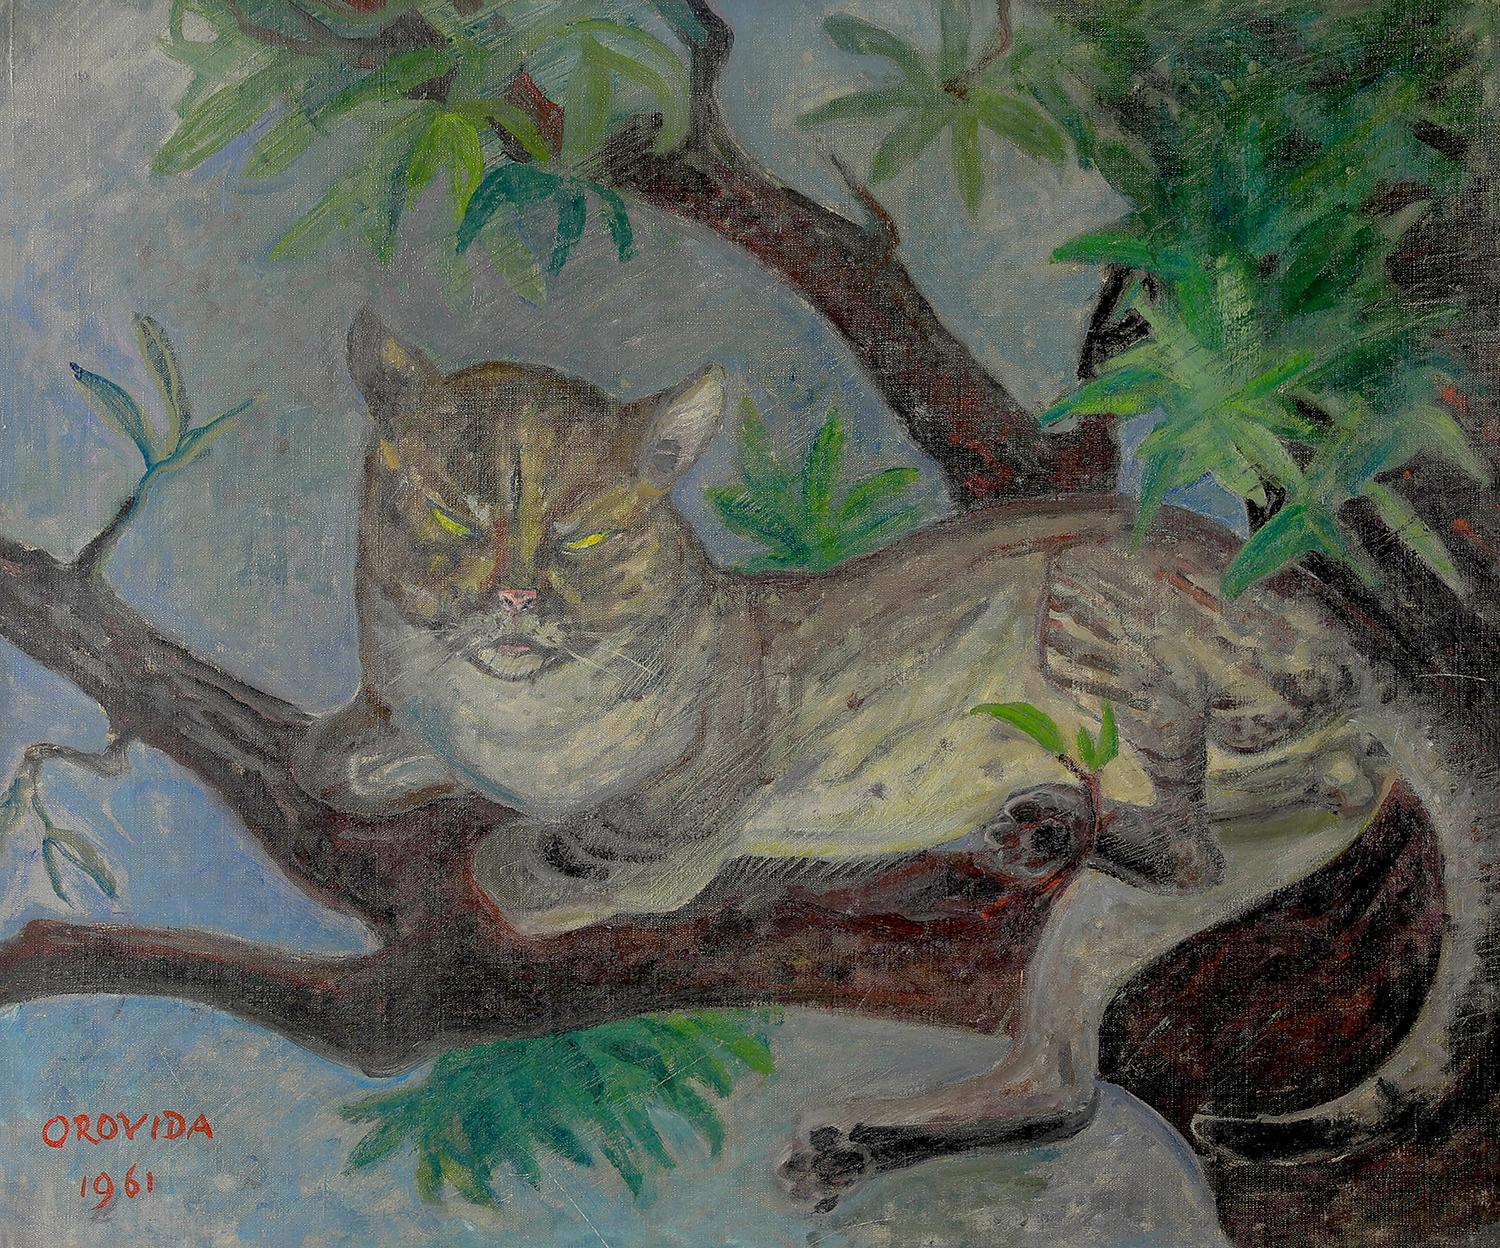 Tom Cat by Orovida Pissarro - Cat oil painting, 1961